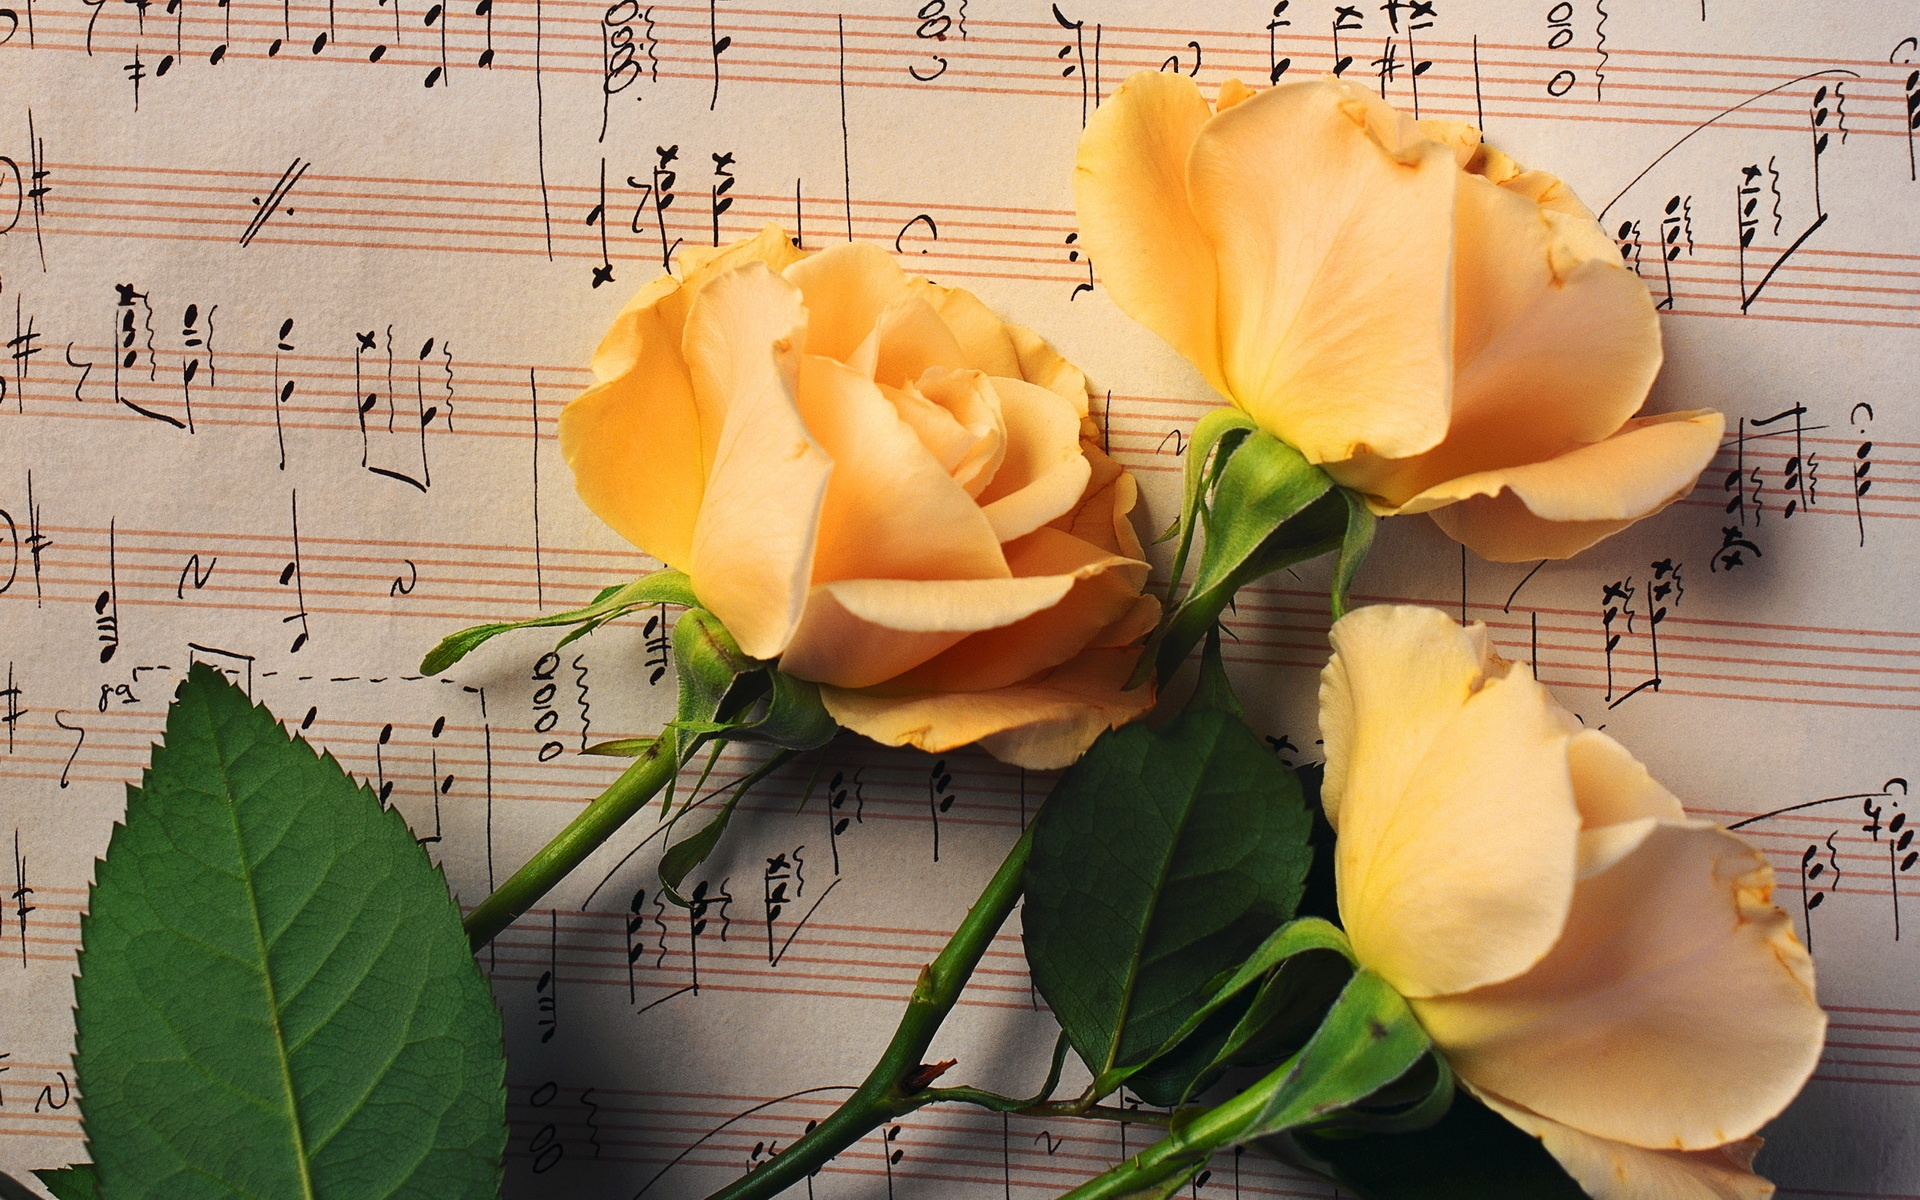 earth, rose, flower, sheet music, yellow flower, flowers